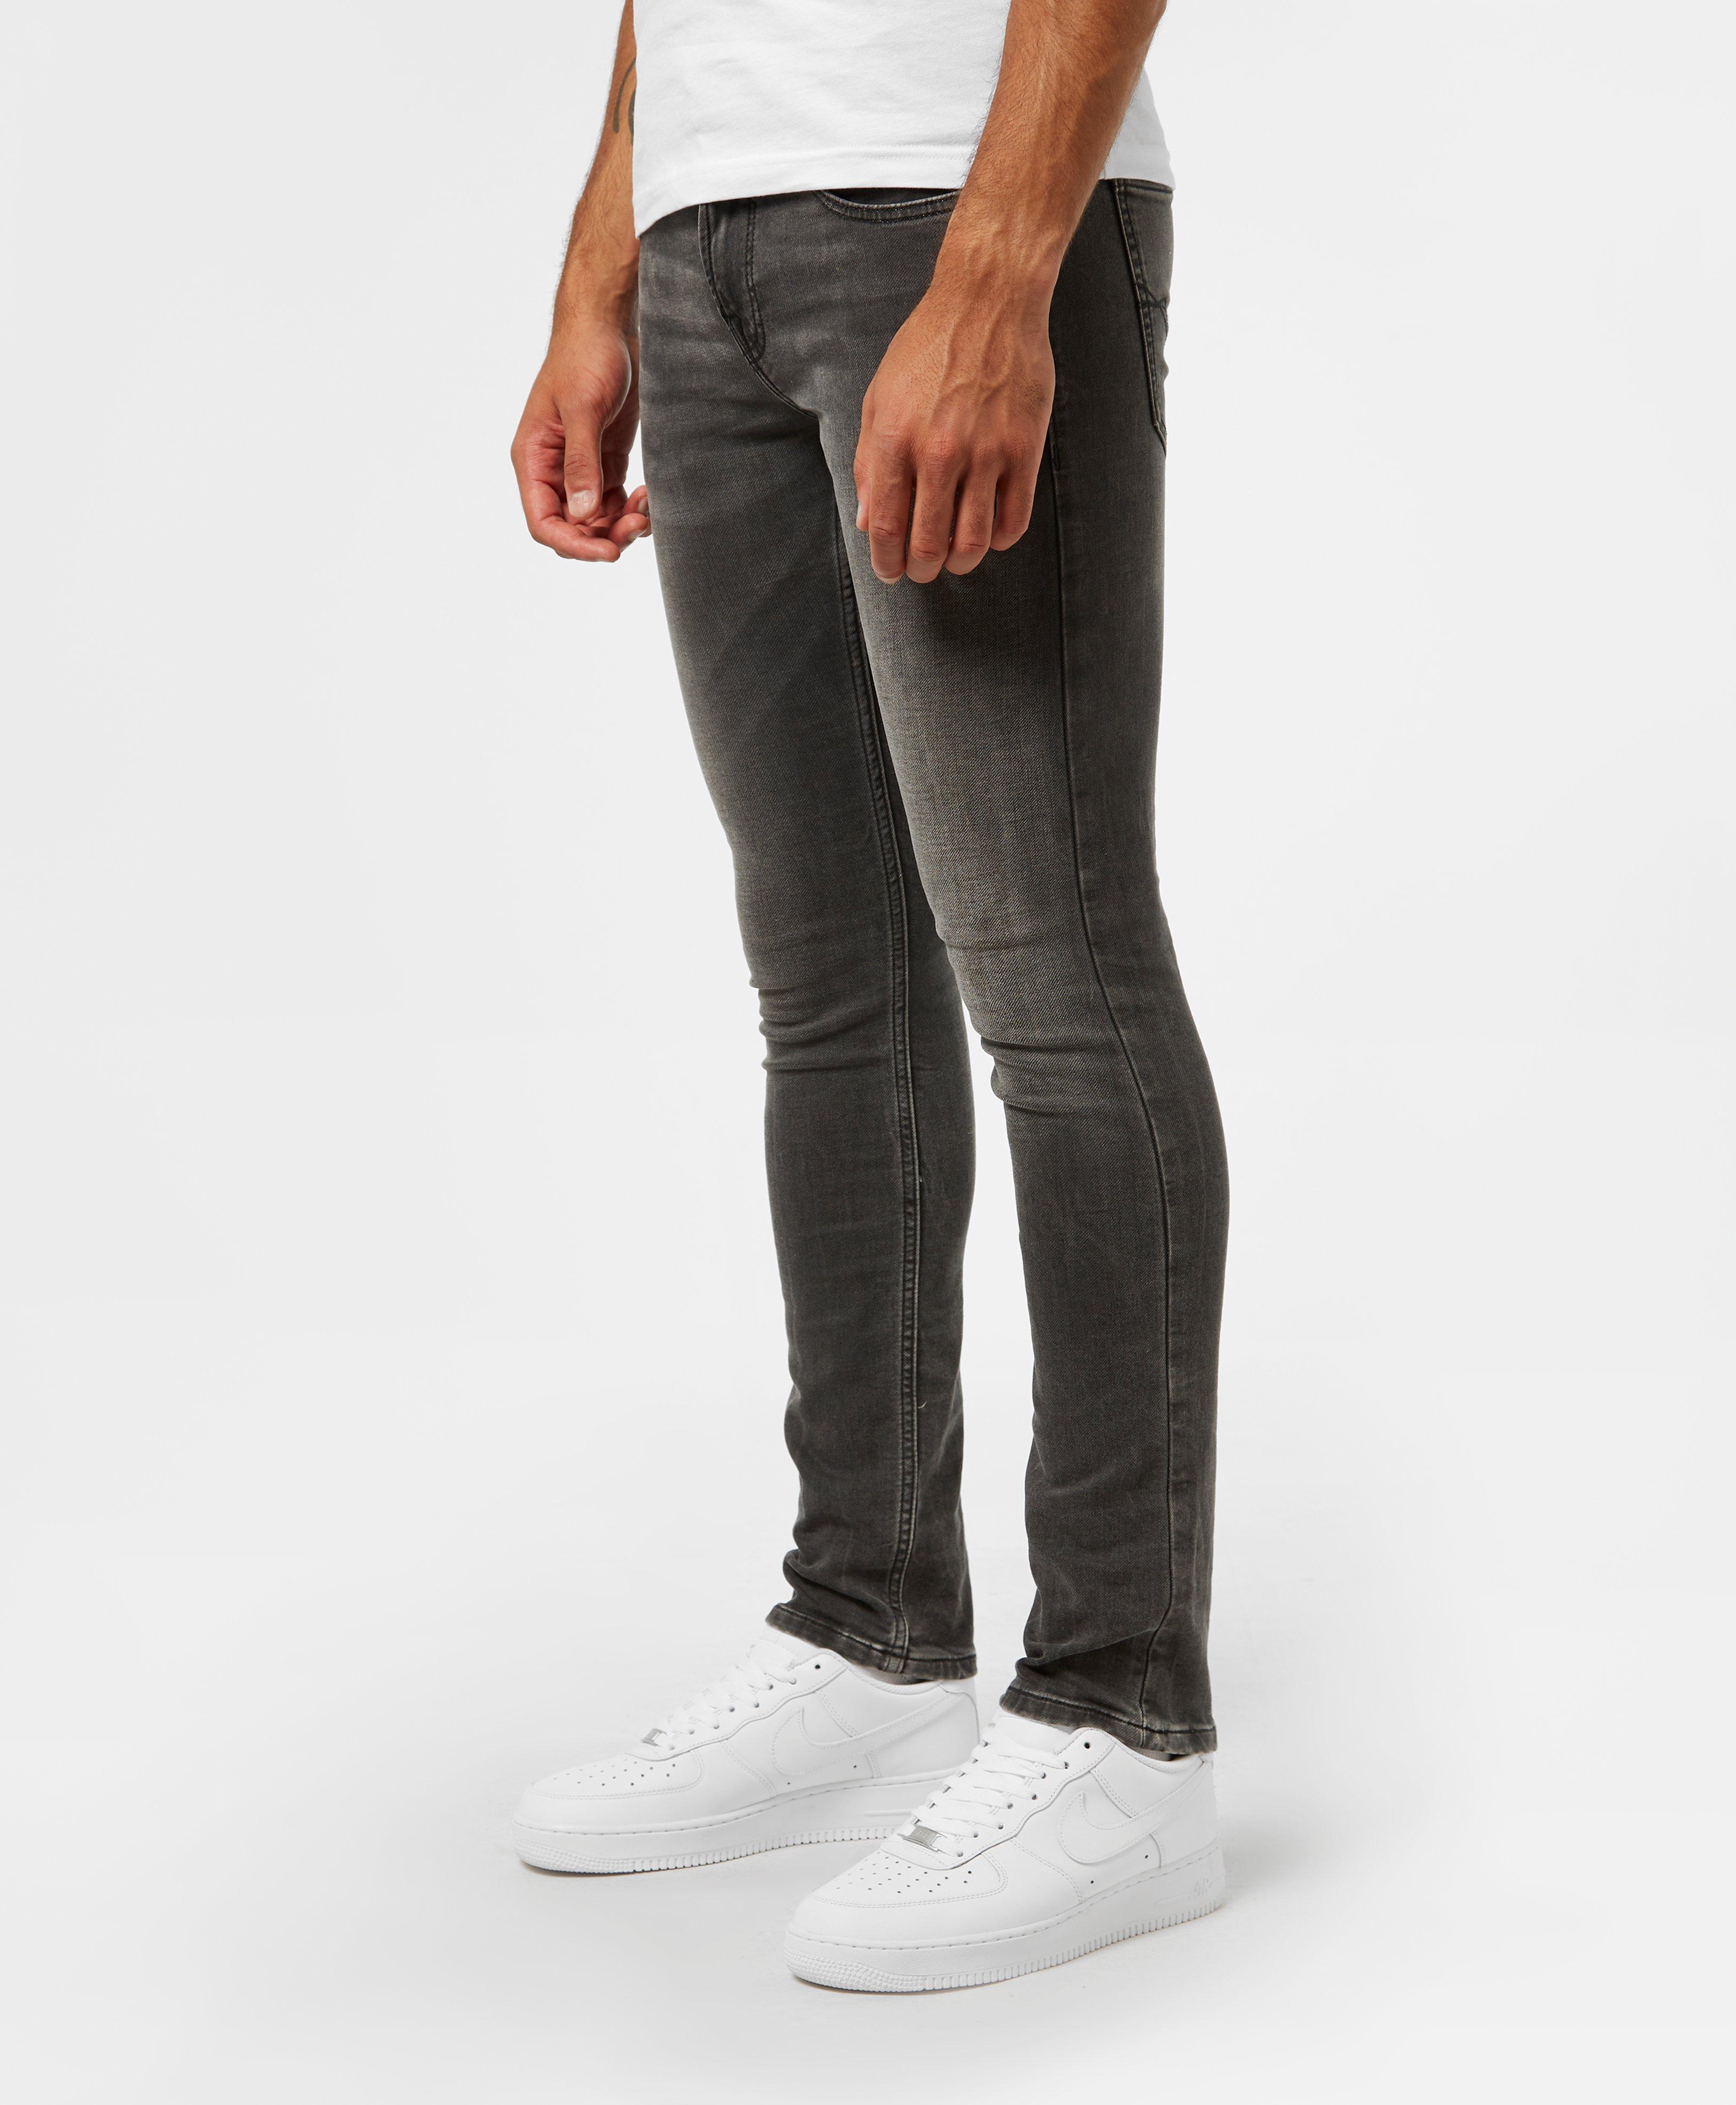 Guess Denim Miami Super Skinny Jeans for Men - Lyst